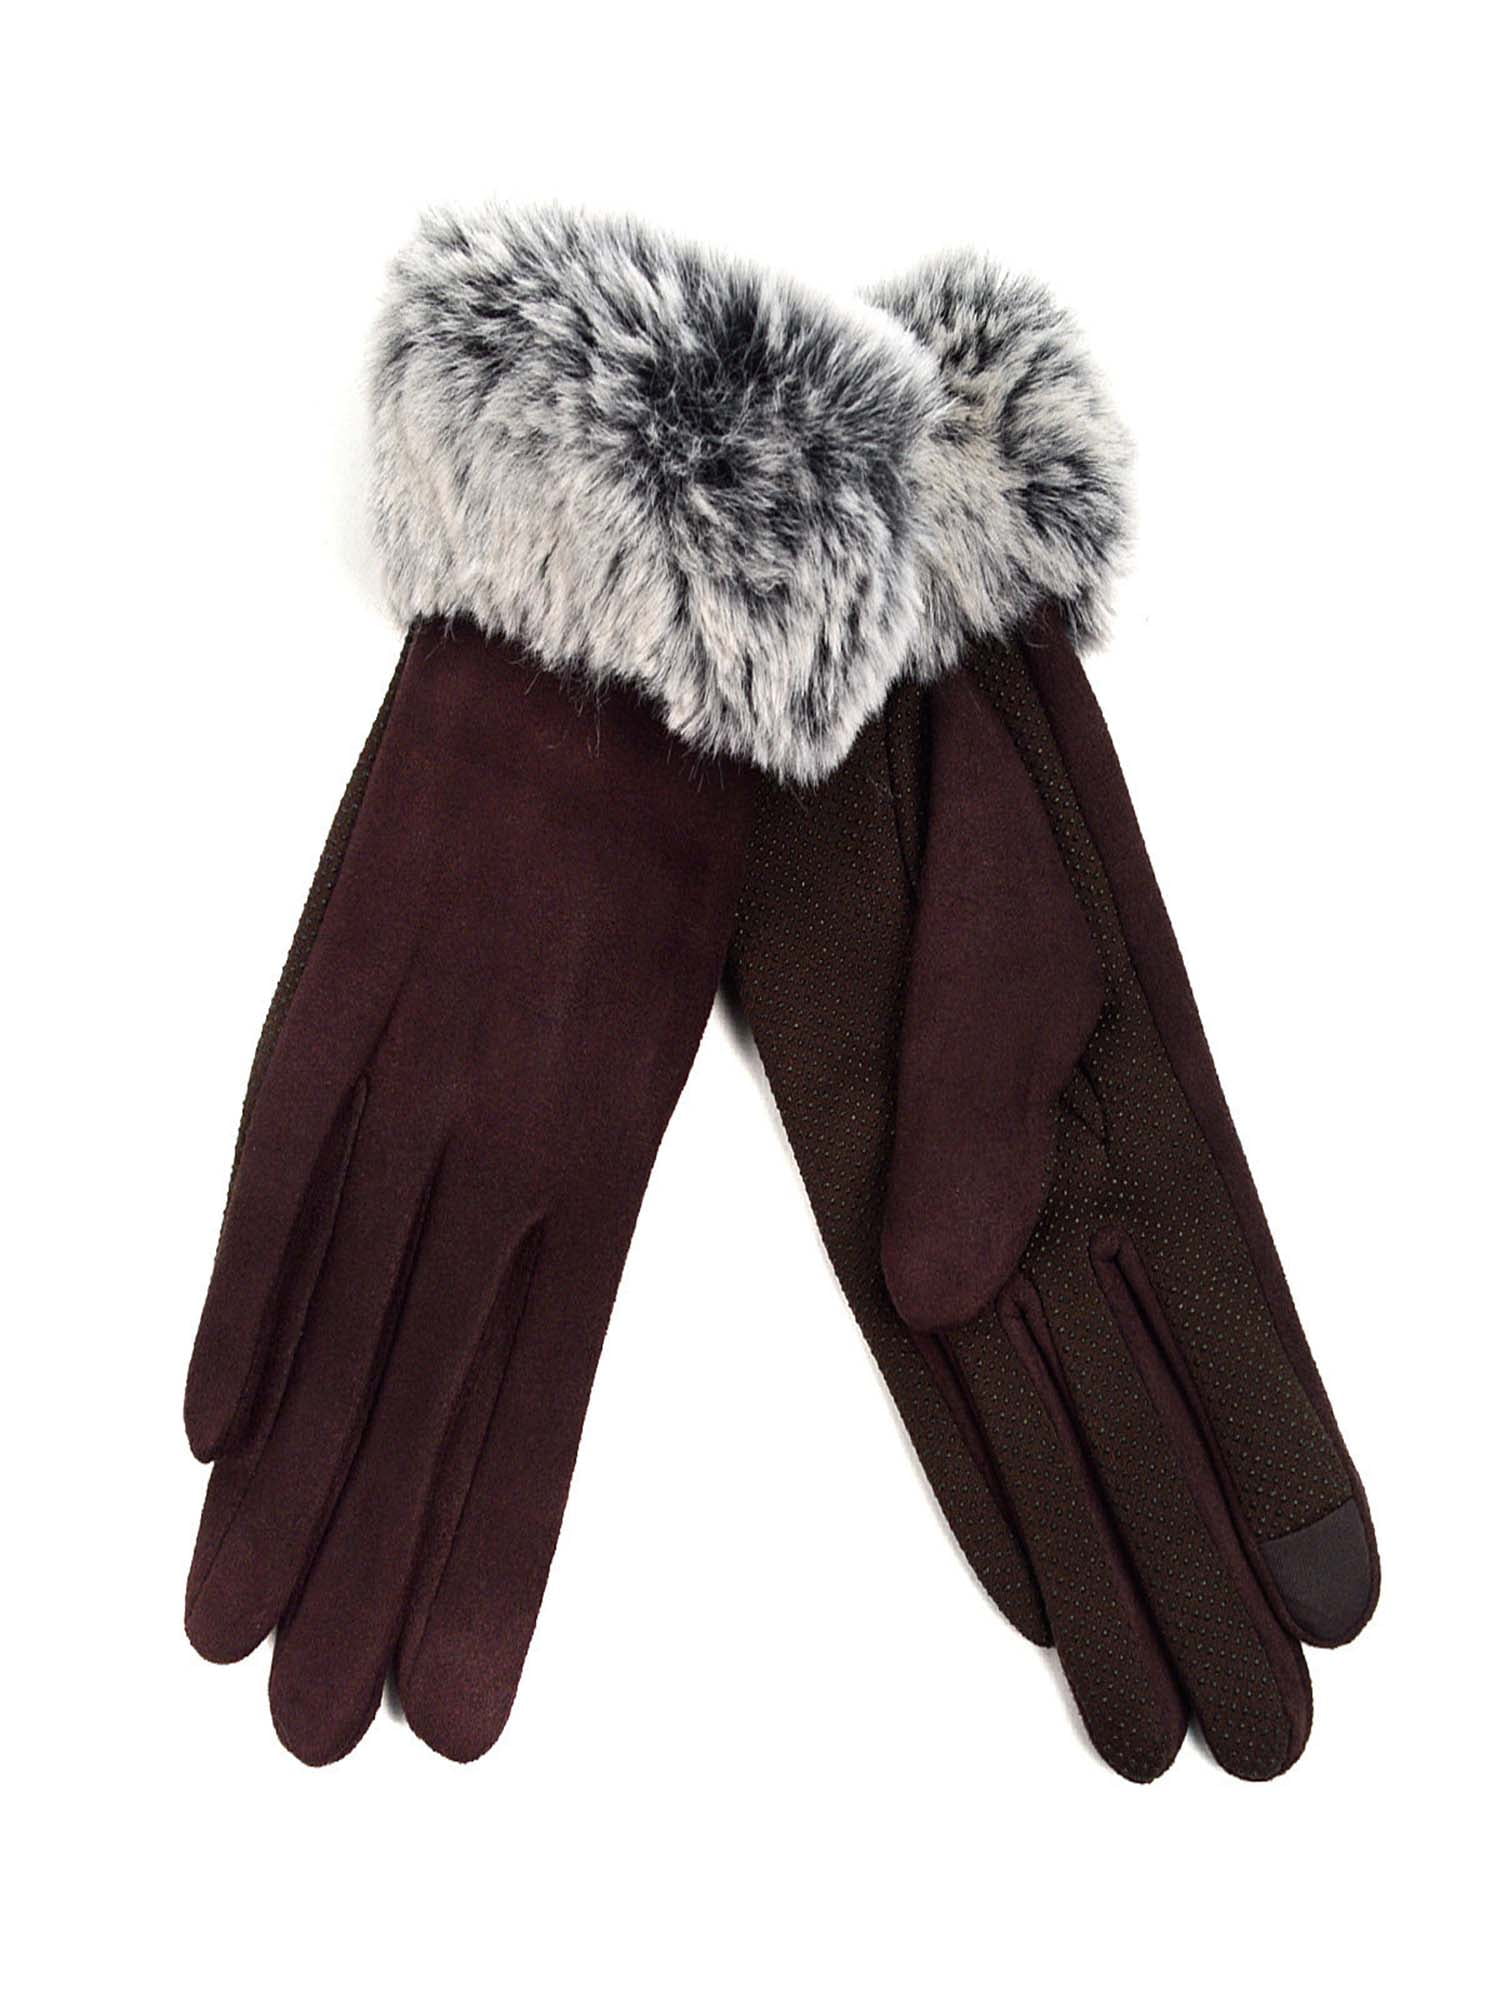 Women Girls Kids Unicorn Mitten Gloves Winter Warm Lining Cozy Knit Pluffy Fuzzy Faux Fur Mitten 